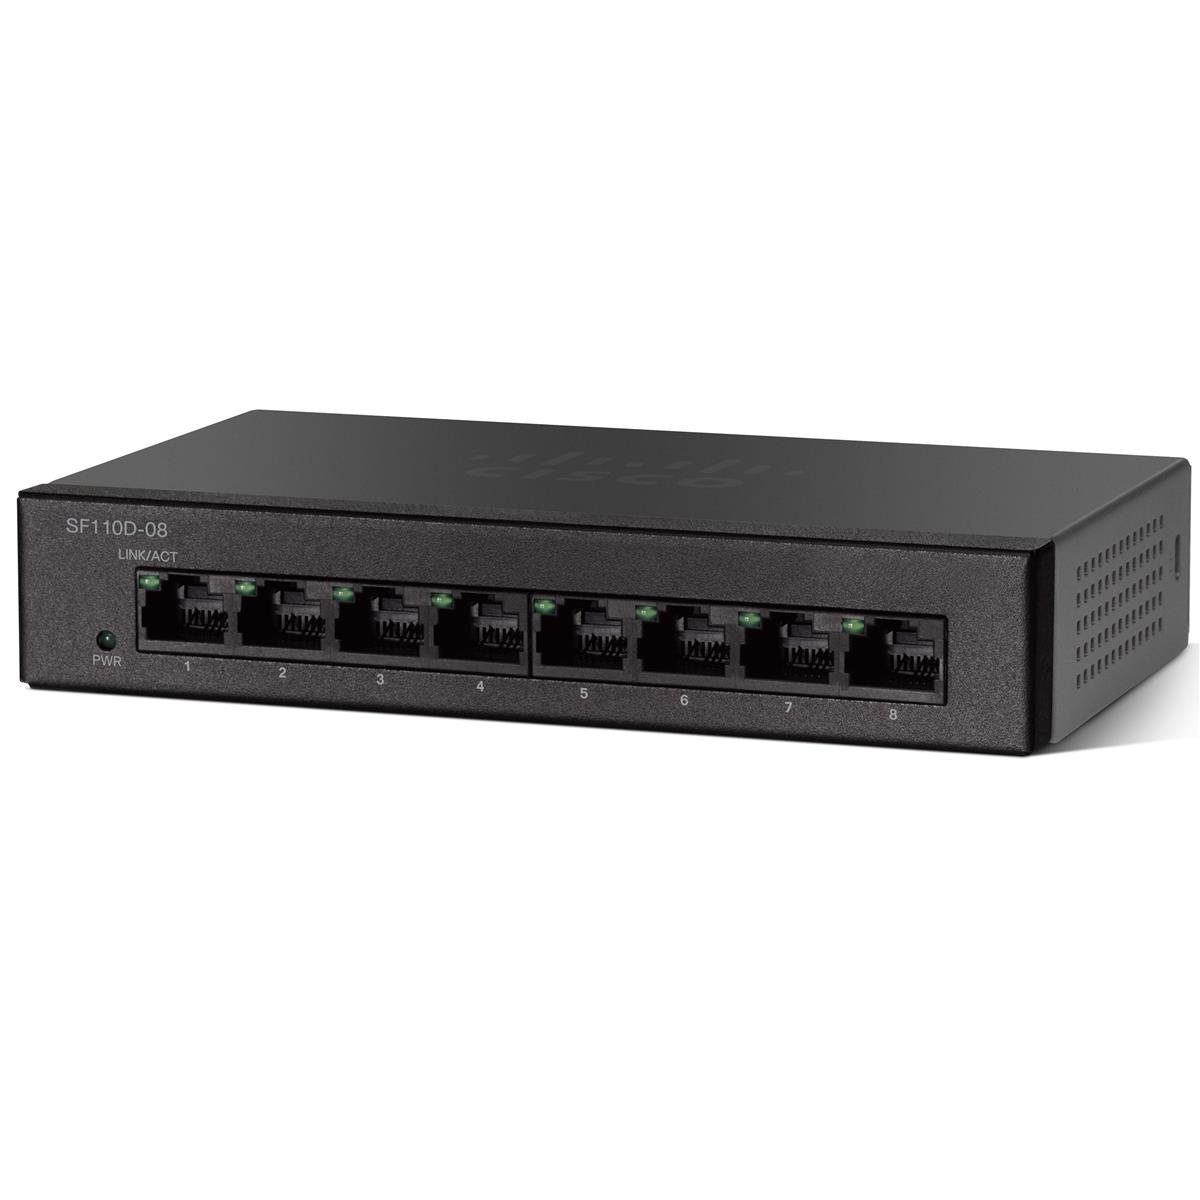 Image of Cisco SF110D-08 8-Port 10/100 Desktop Unmanaged Switch